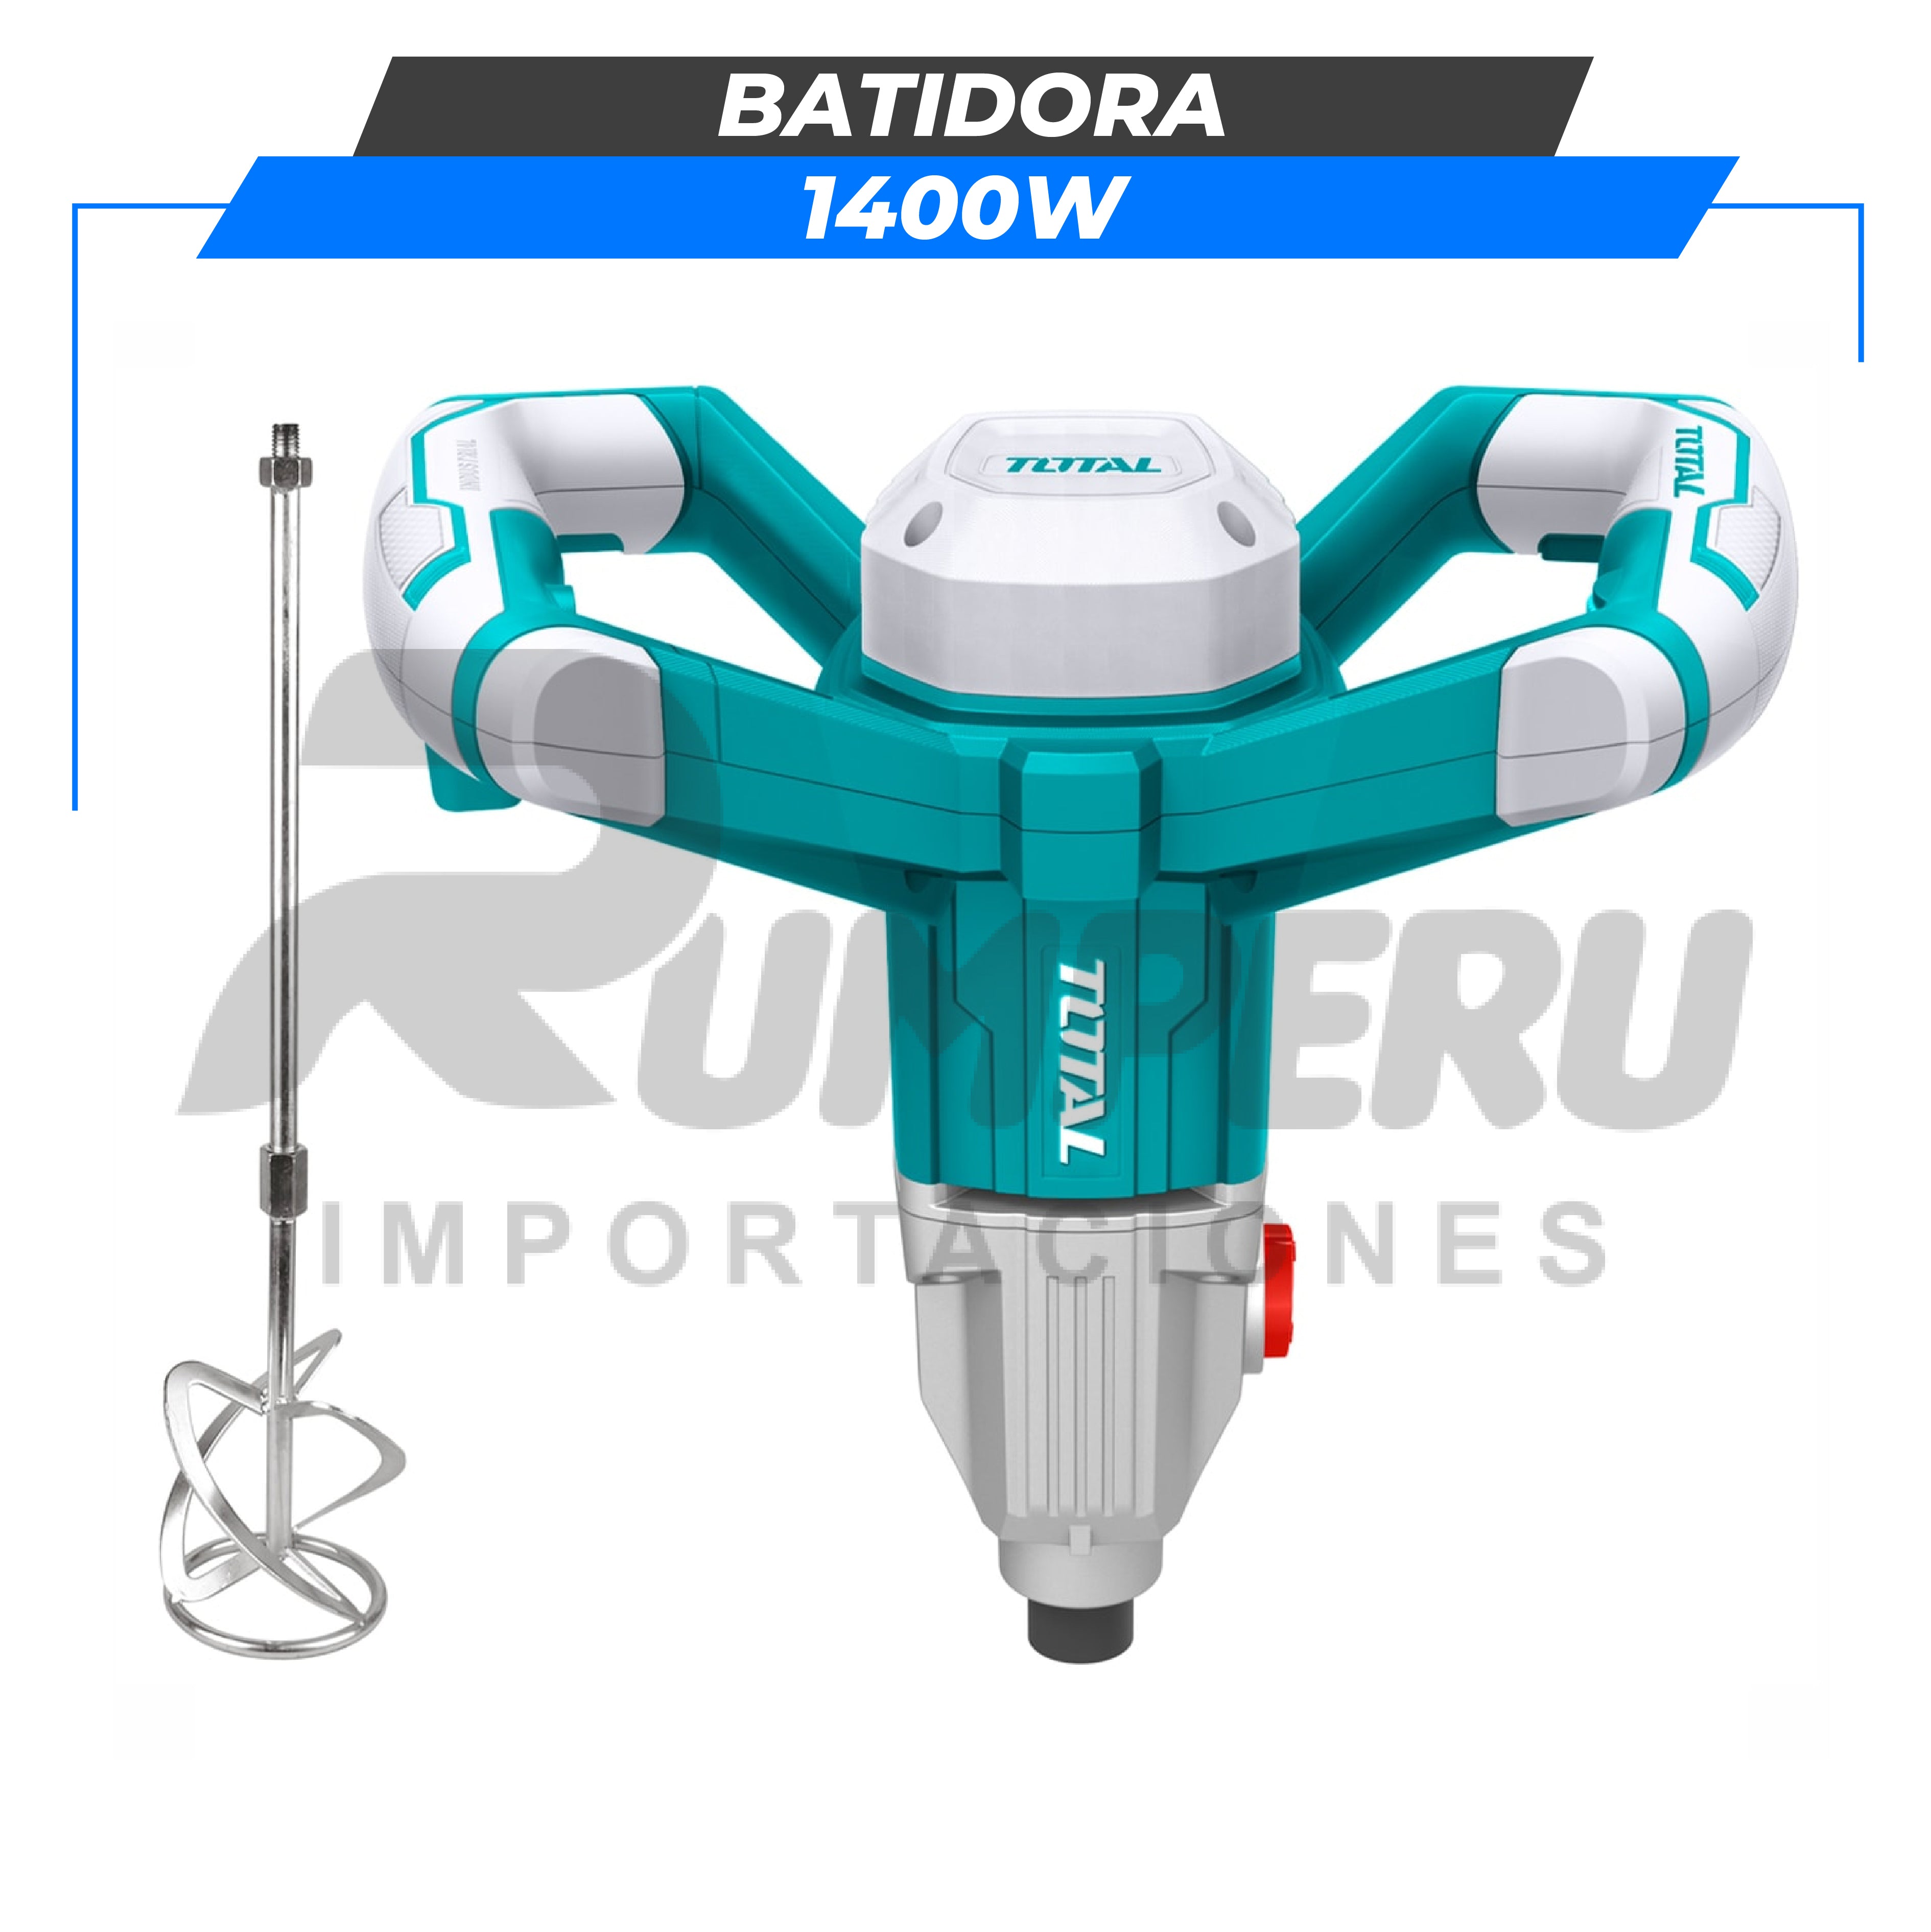 Batidora 1400W